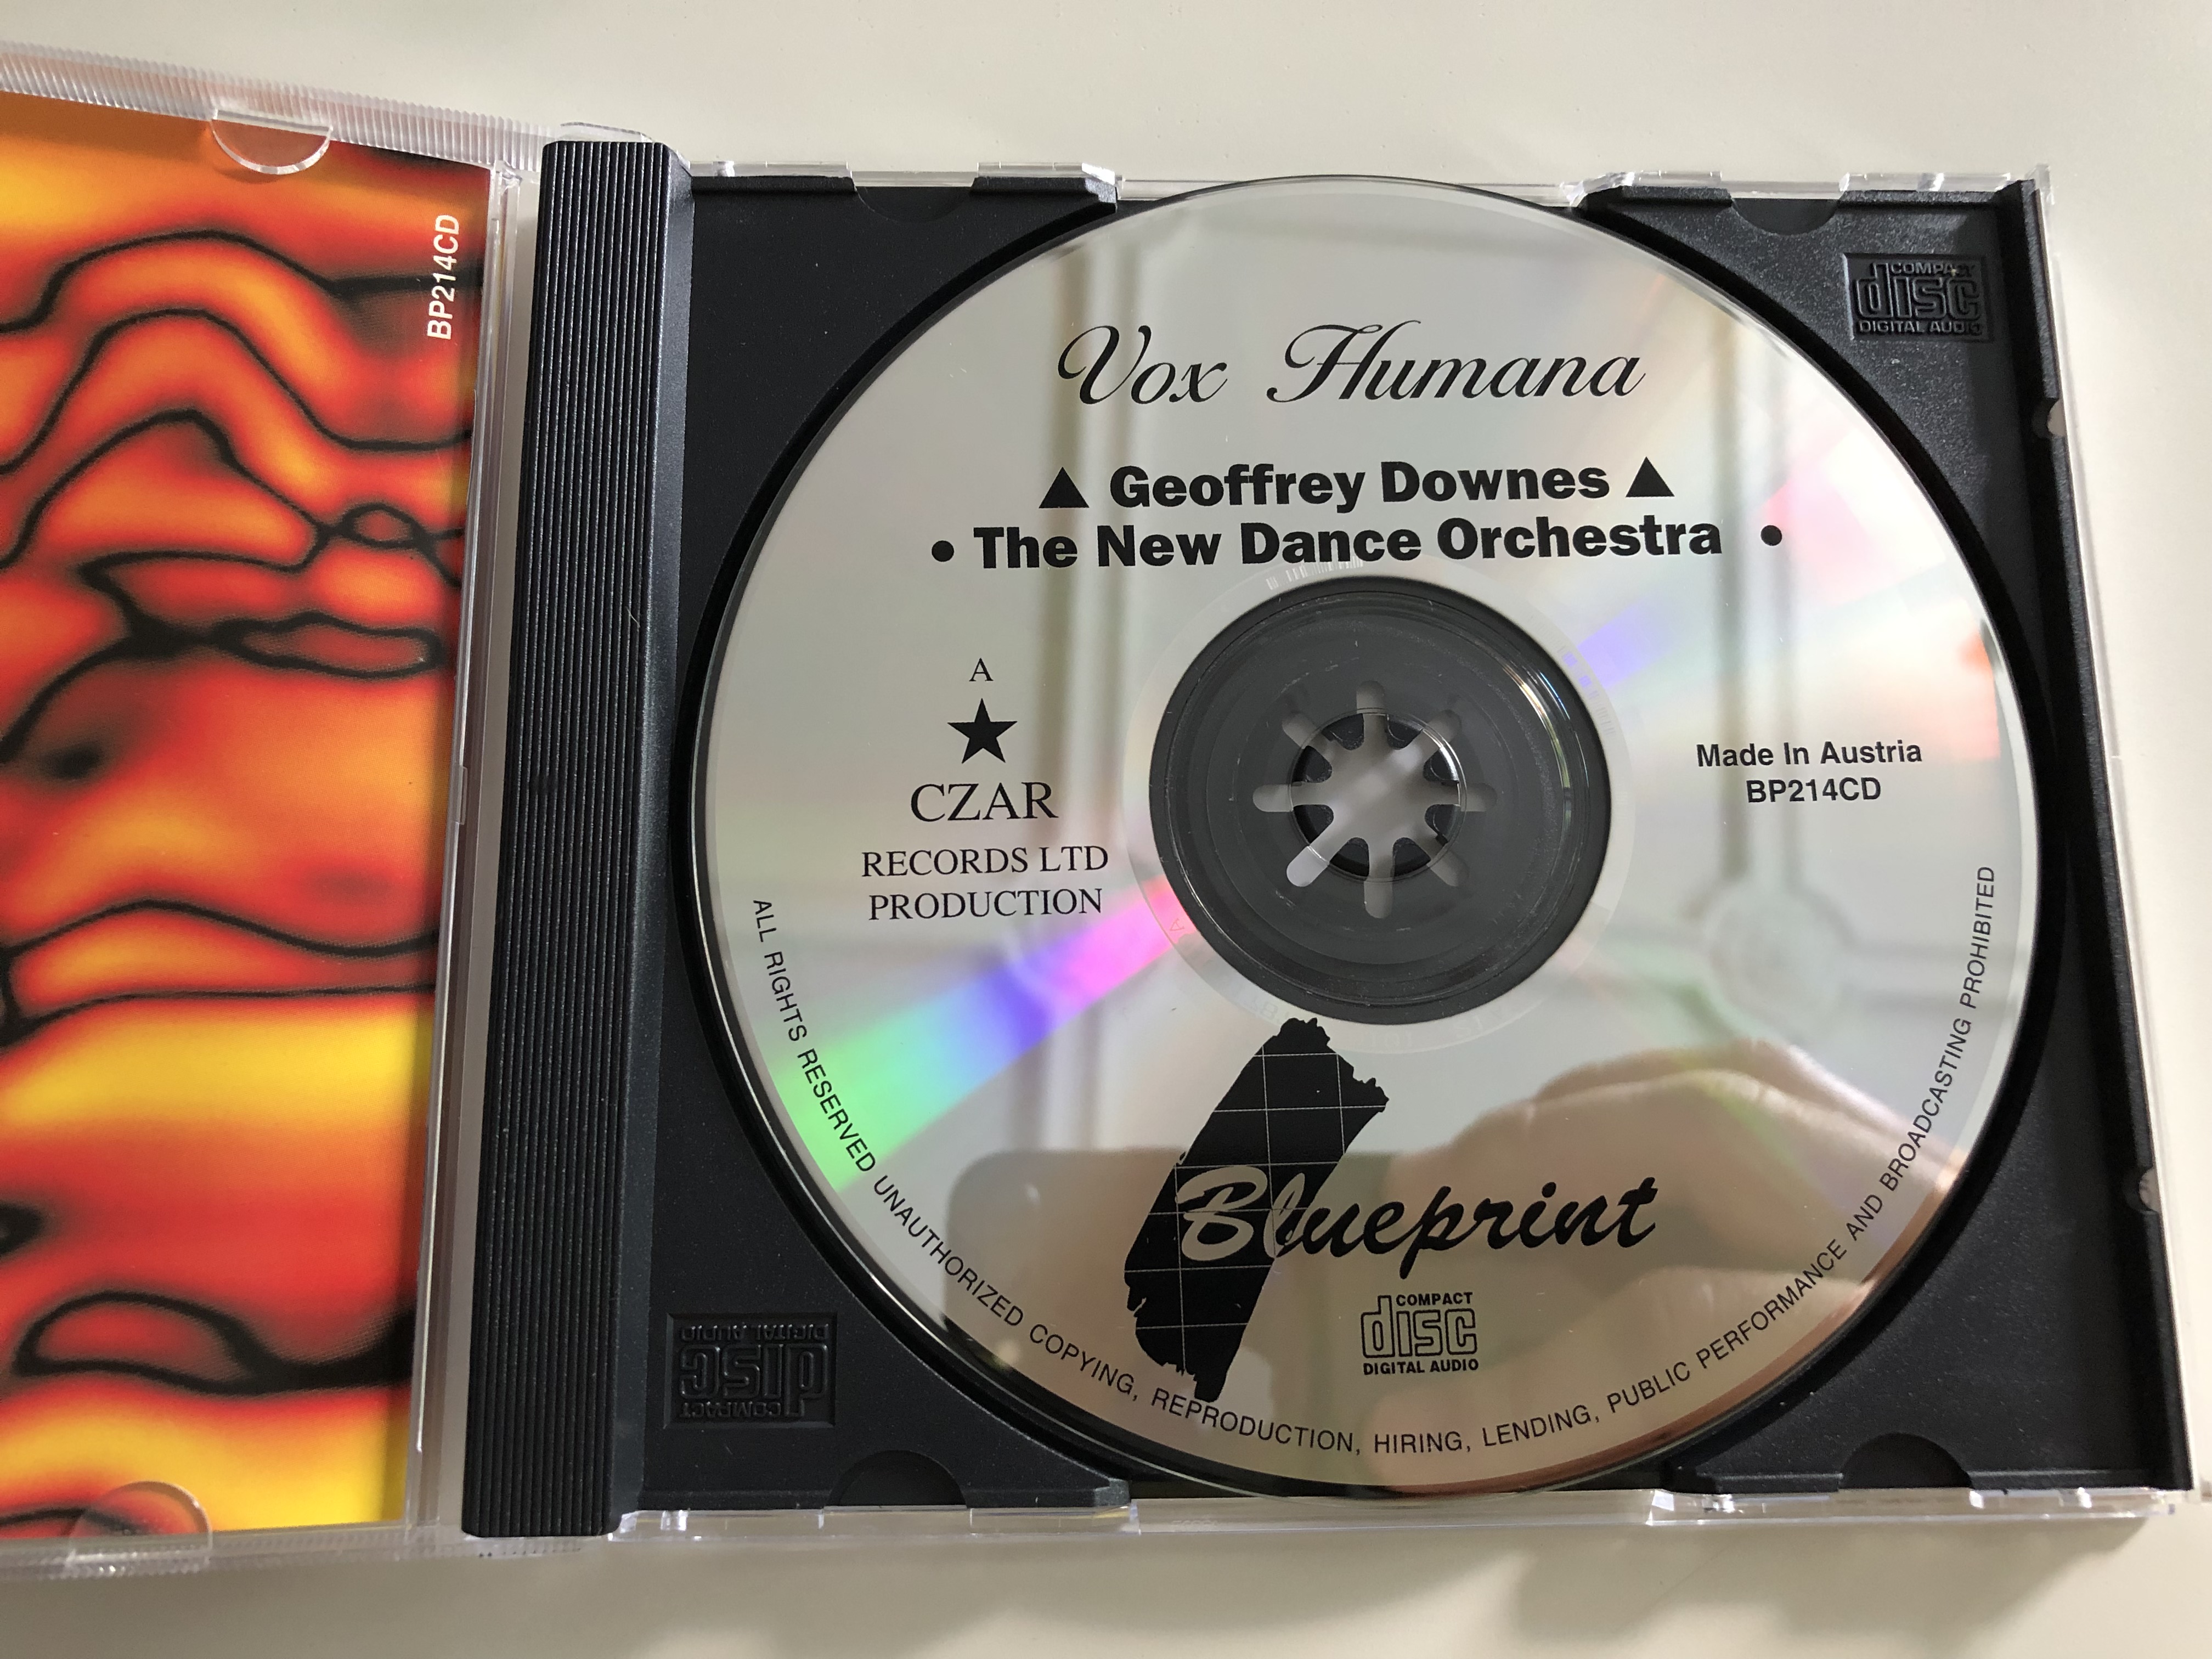 geoffrey-downes-vox-humana-the-new-dance-orchestra-audio-cd-1995-czar-records-bp214cd-7-.jpg